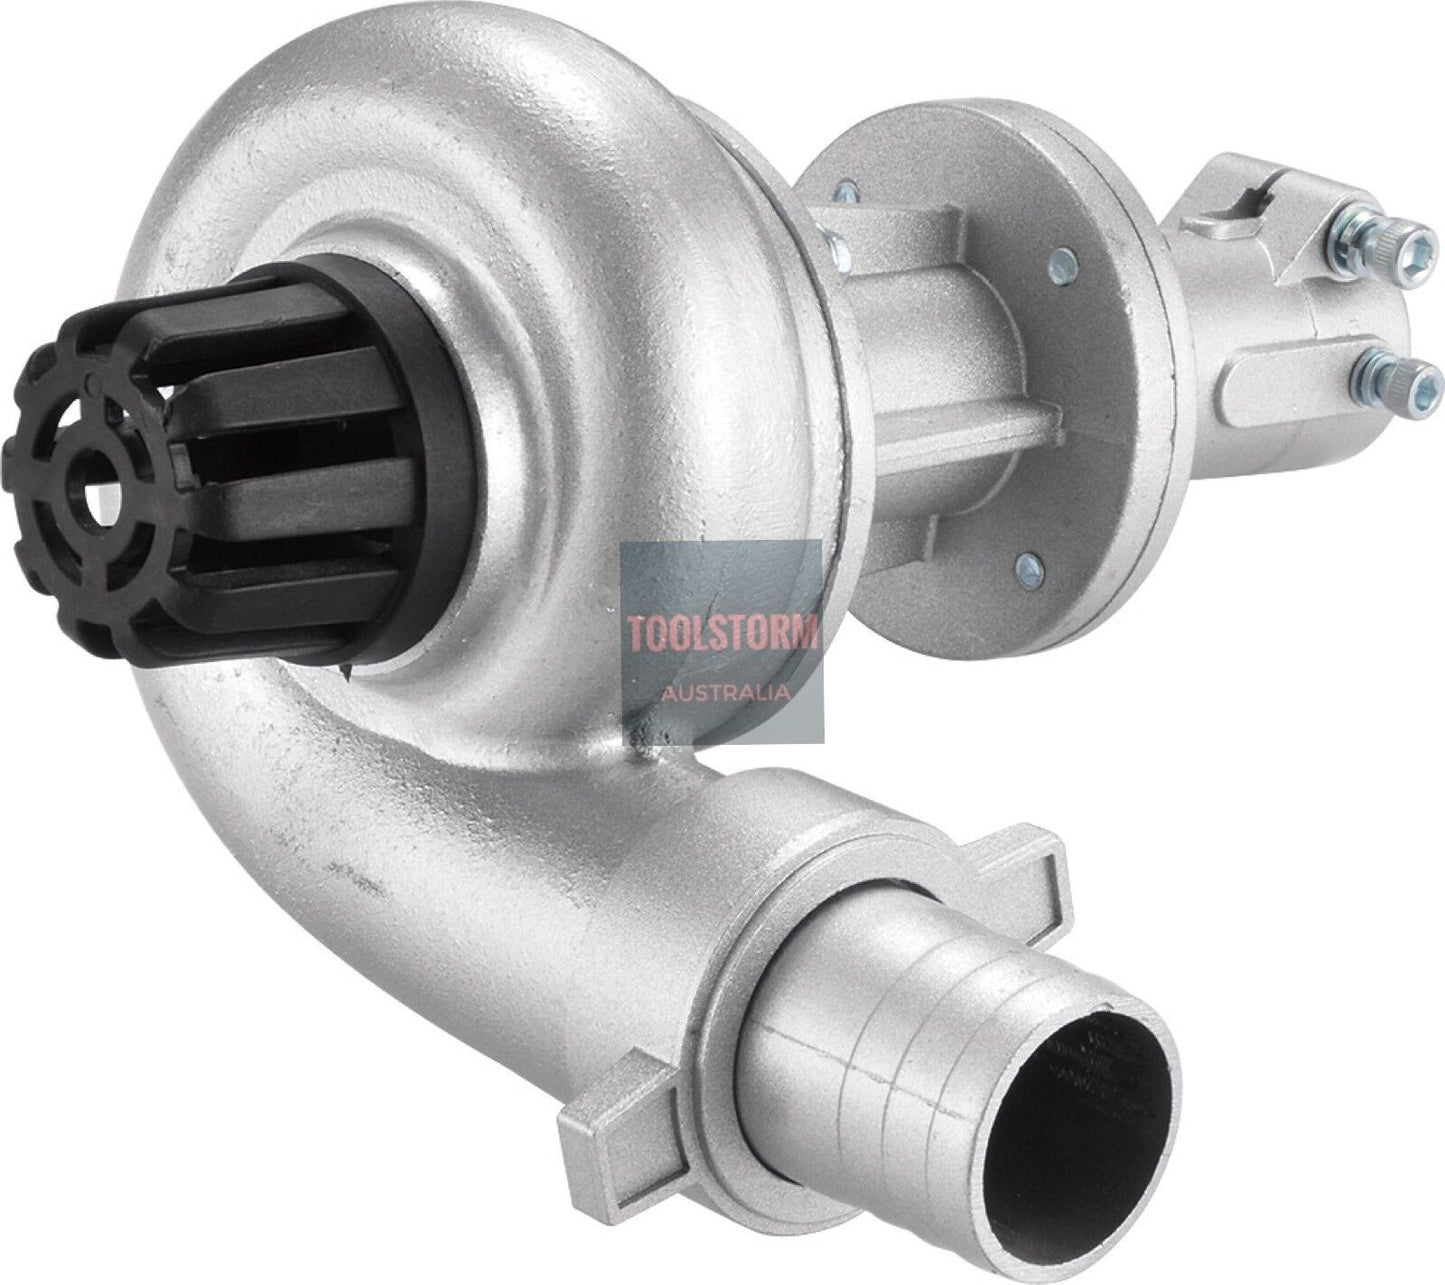 Water Pump Attachment Fit ROK line Trimmer 43CC 3 in1  Model 150-85-50711